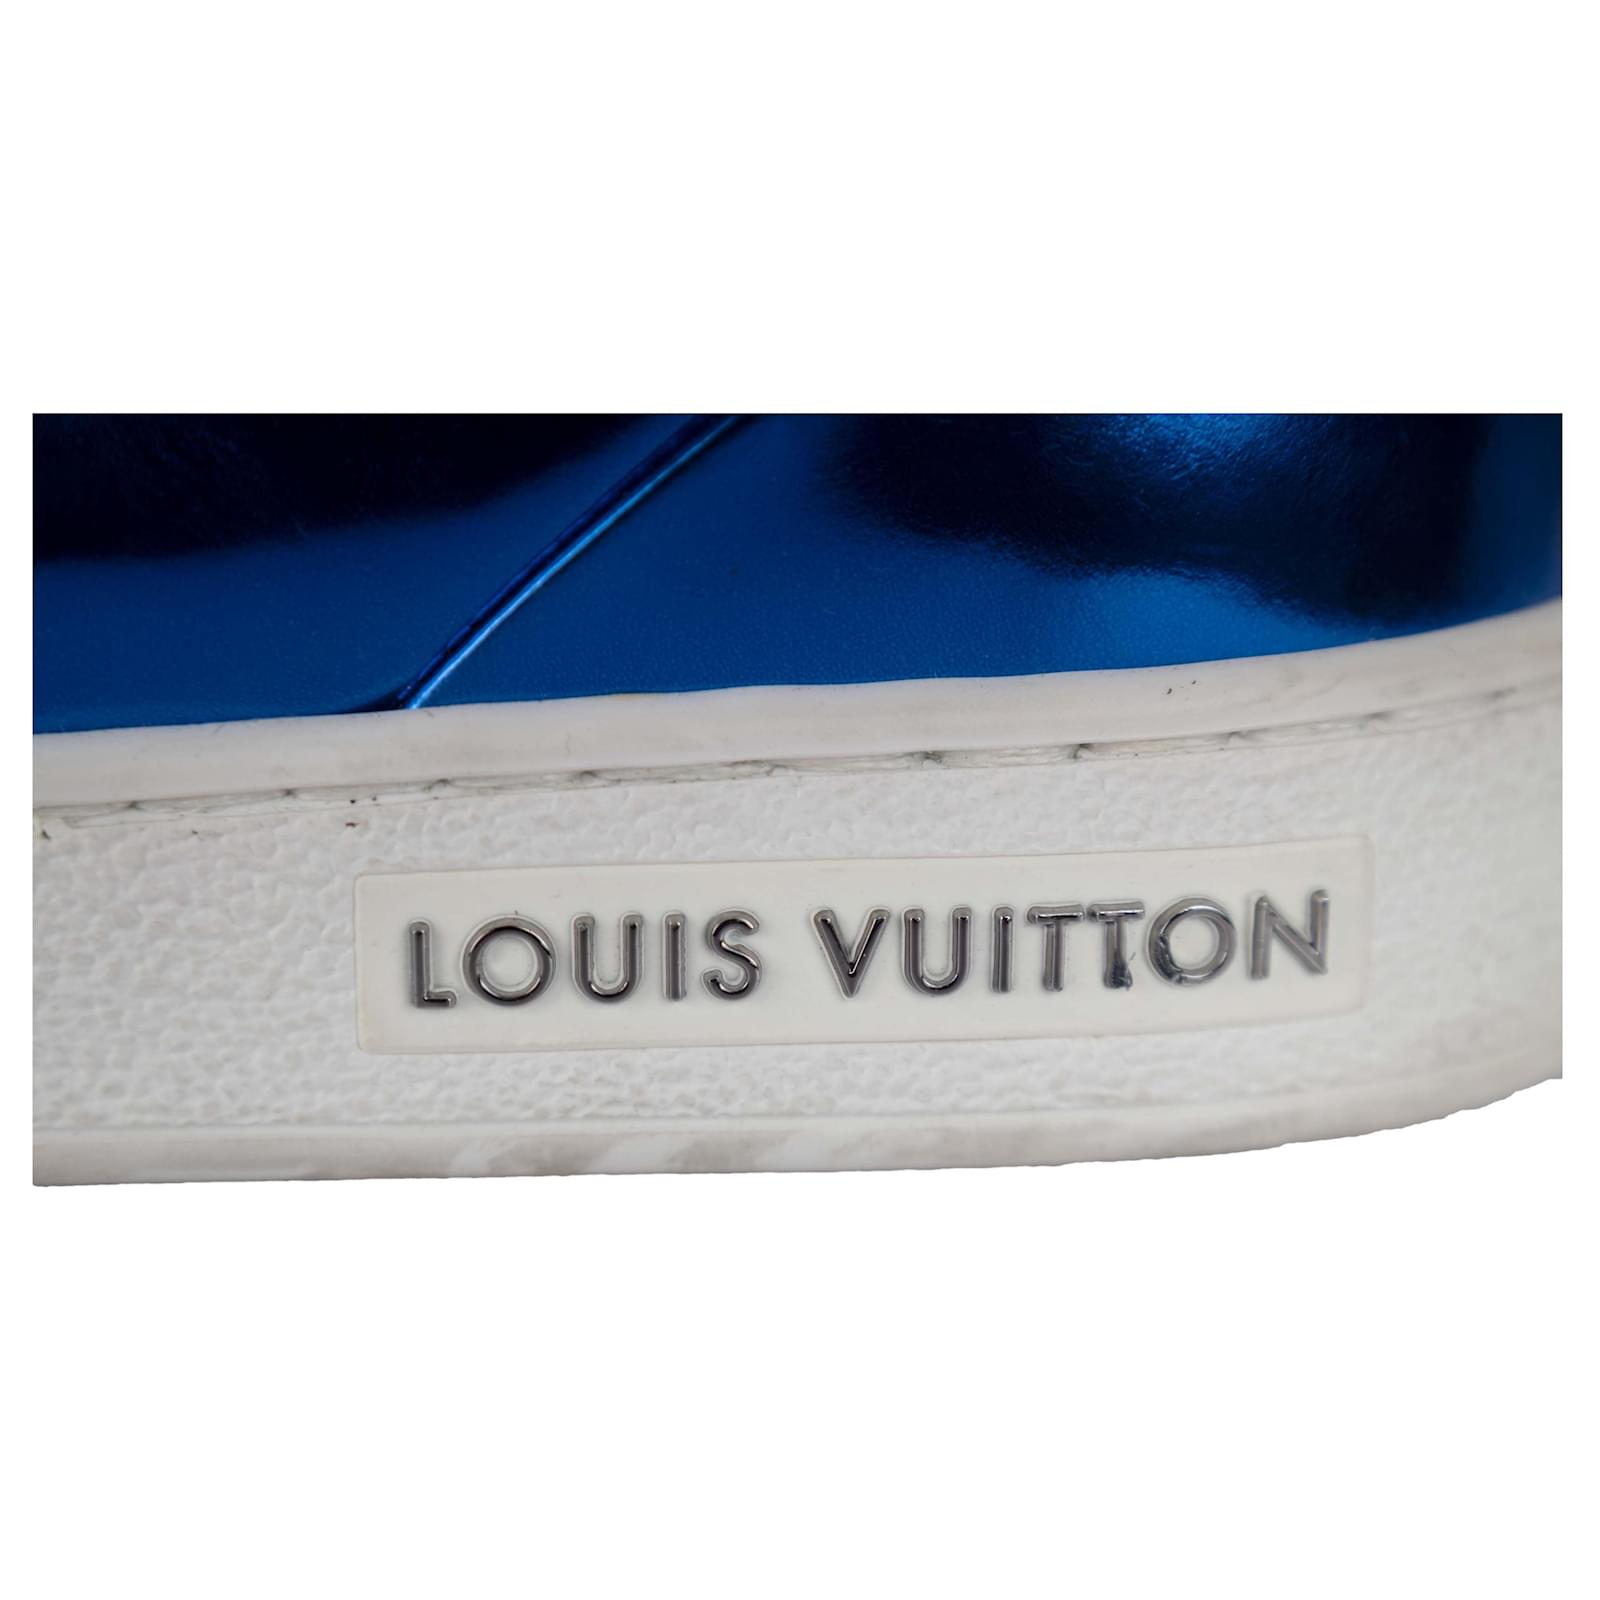 Sneakers Louis Vuitton Louis Vuitton Metallic Blue Sneakers Size 37 It